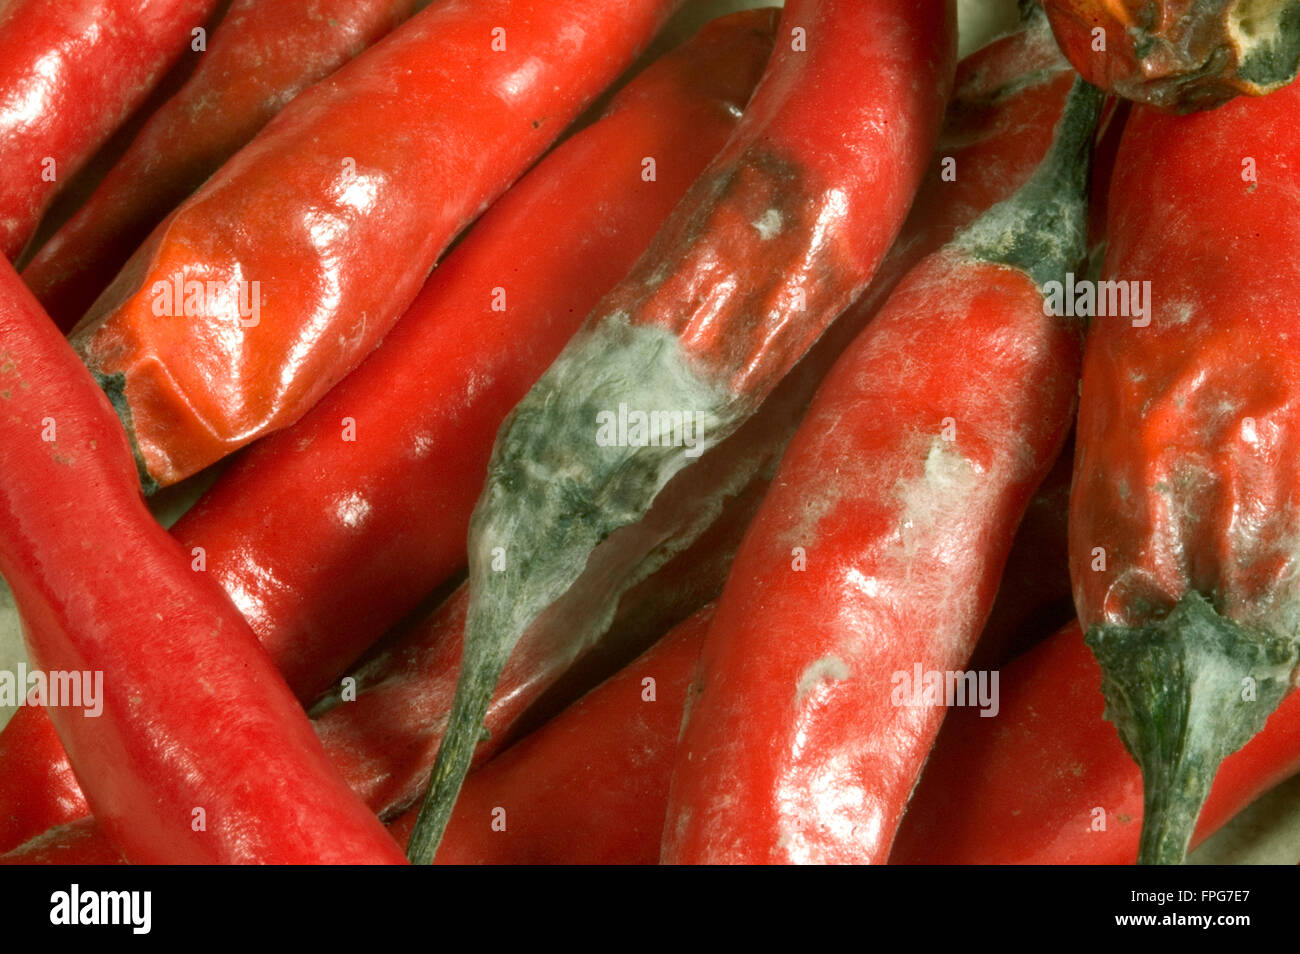 Grey mould (Botrytis cinerea) developed on harvested chilli peppers Stock Photo